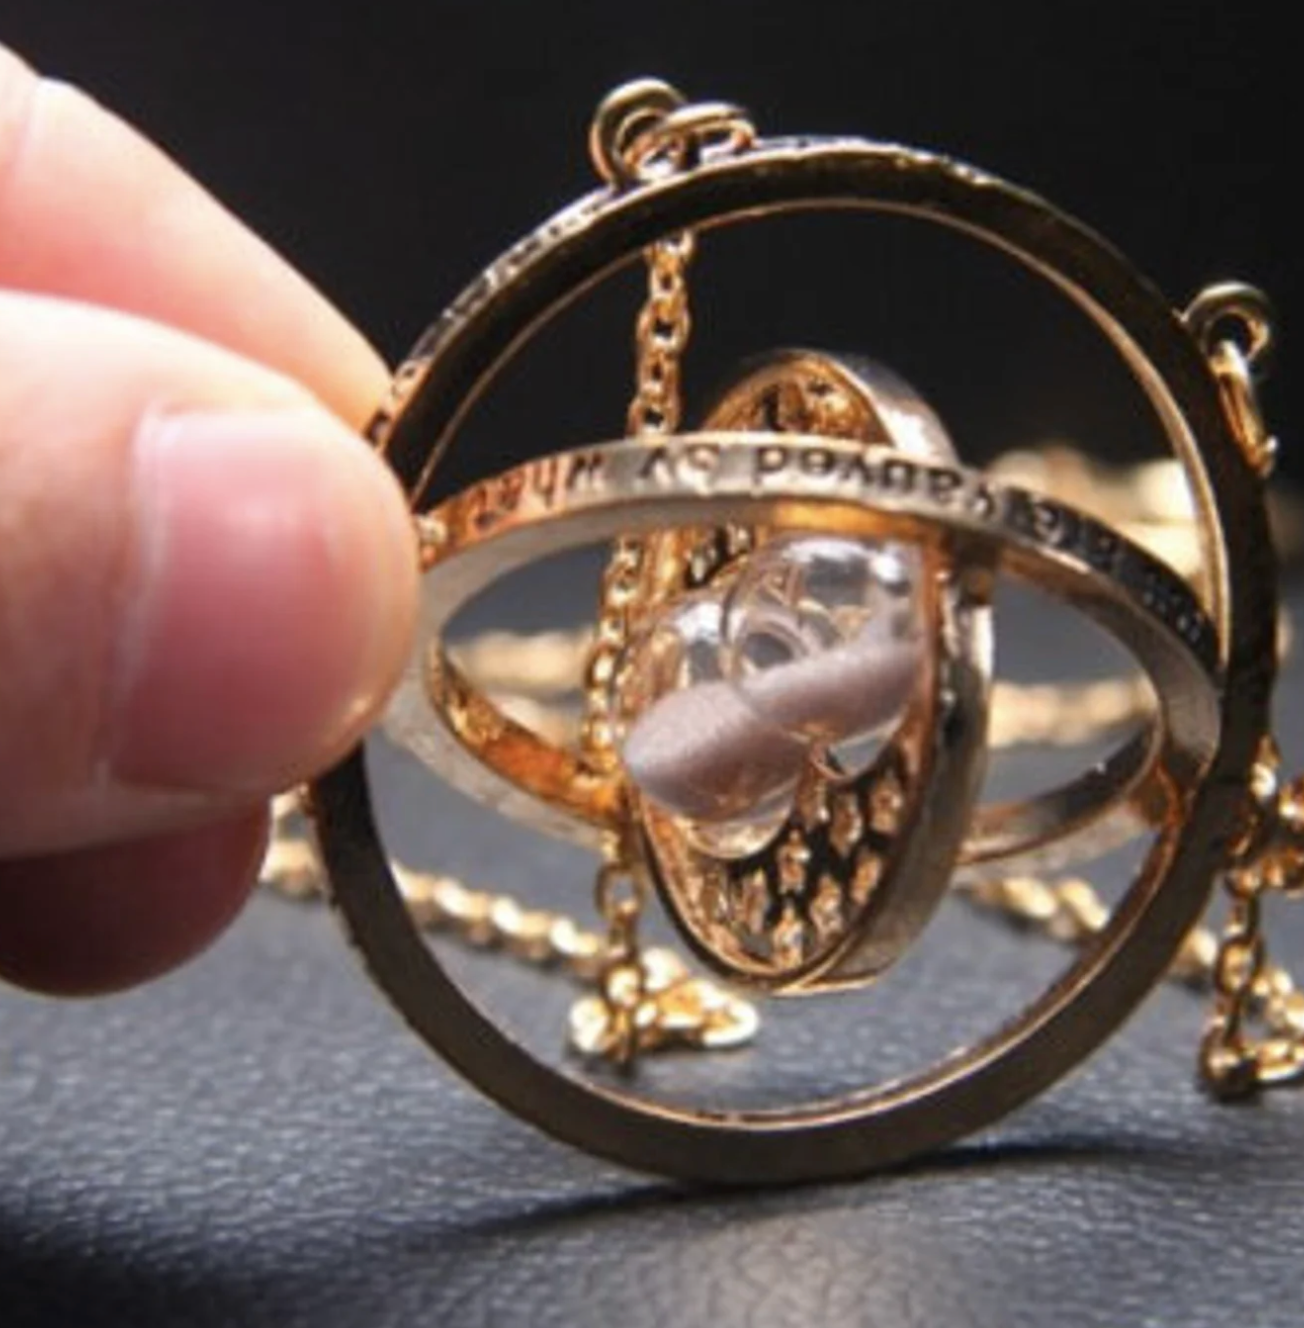 TIME TURNER NECKLACE Harry Potter Inspired Jewellery Pendant Hermione  Granger | eBay